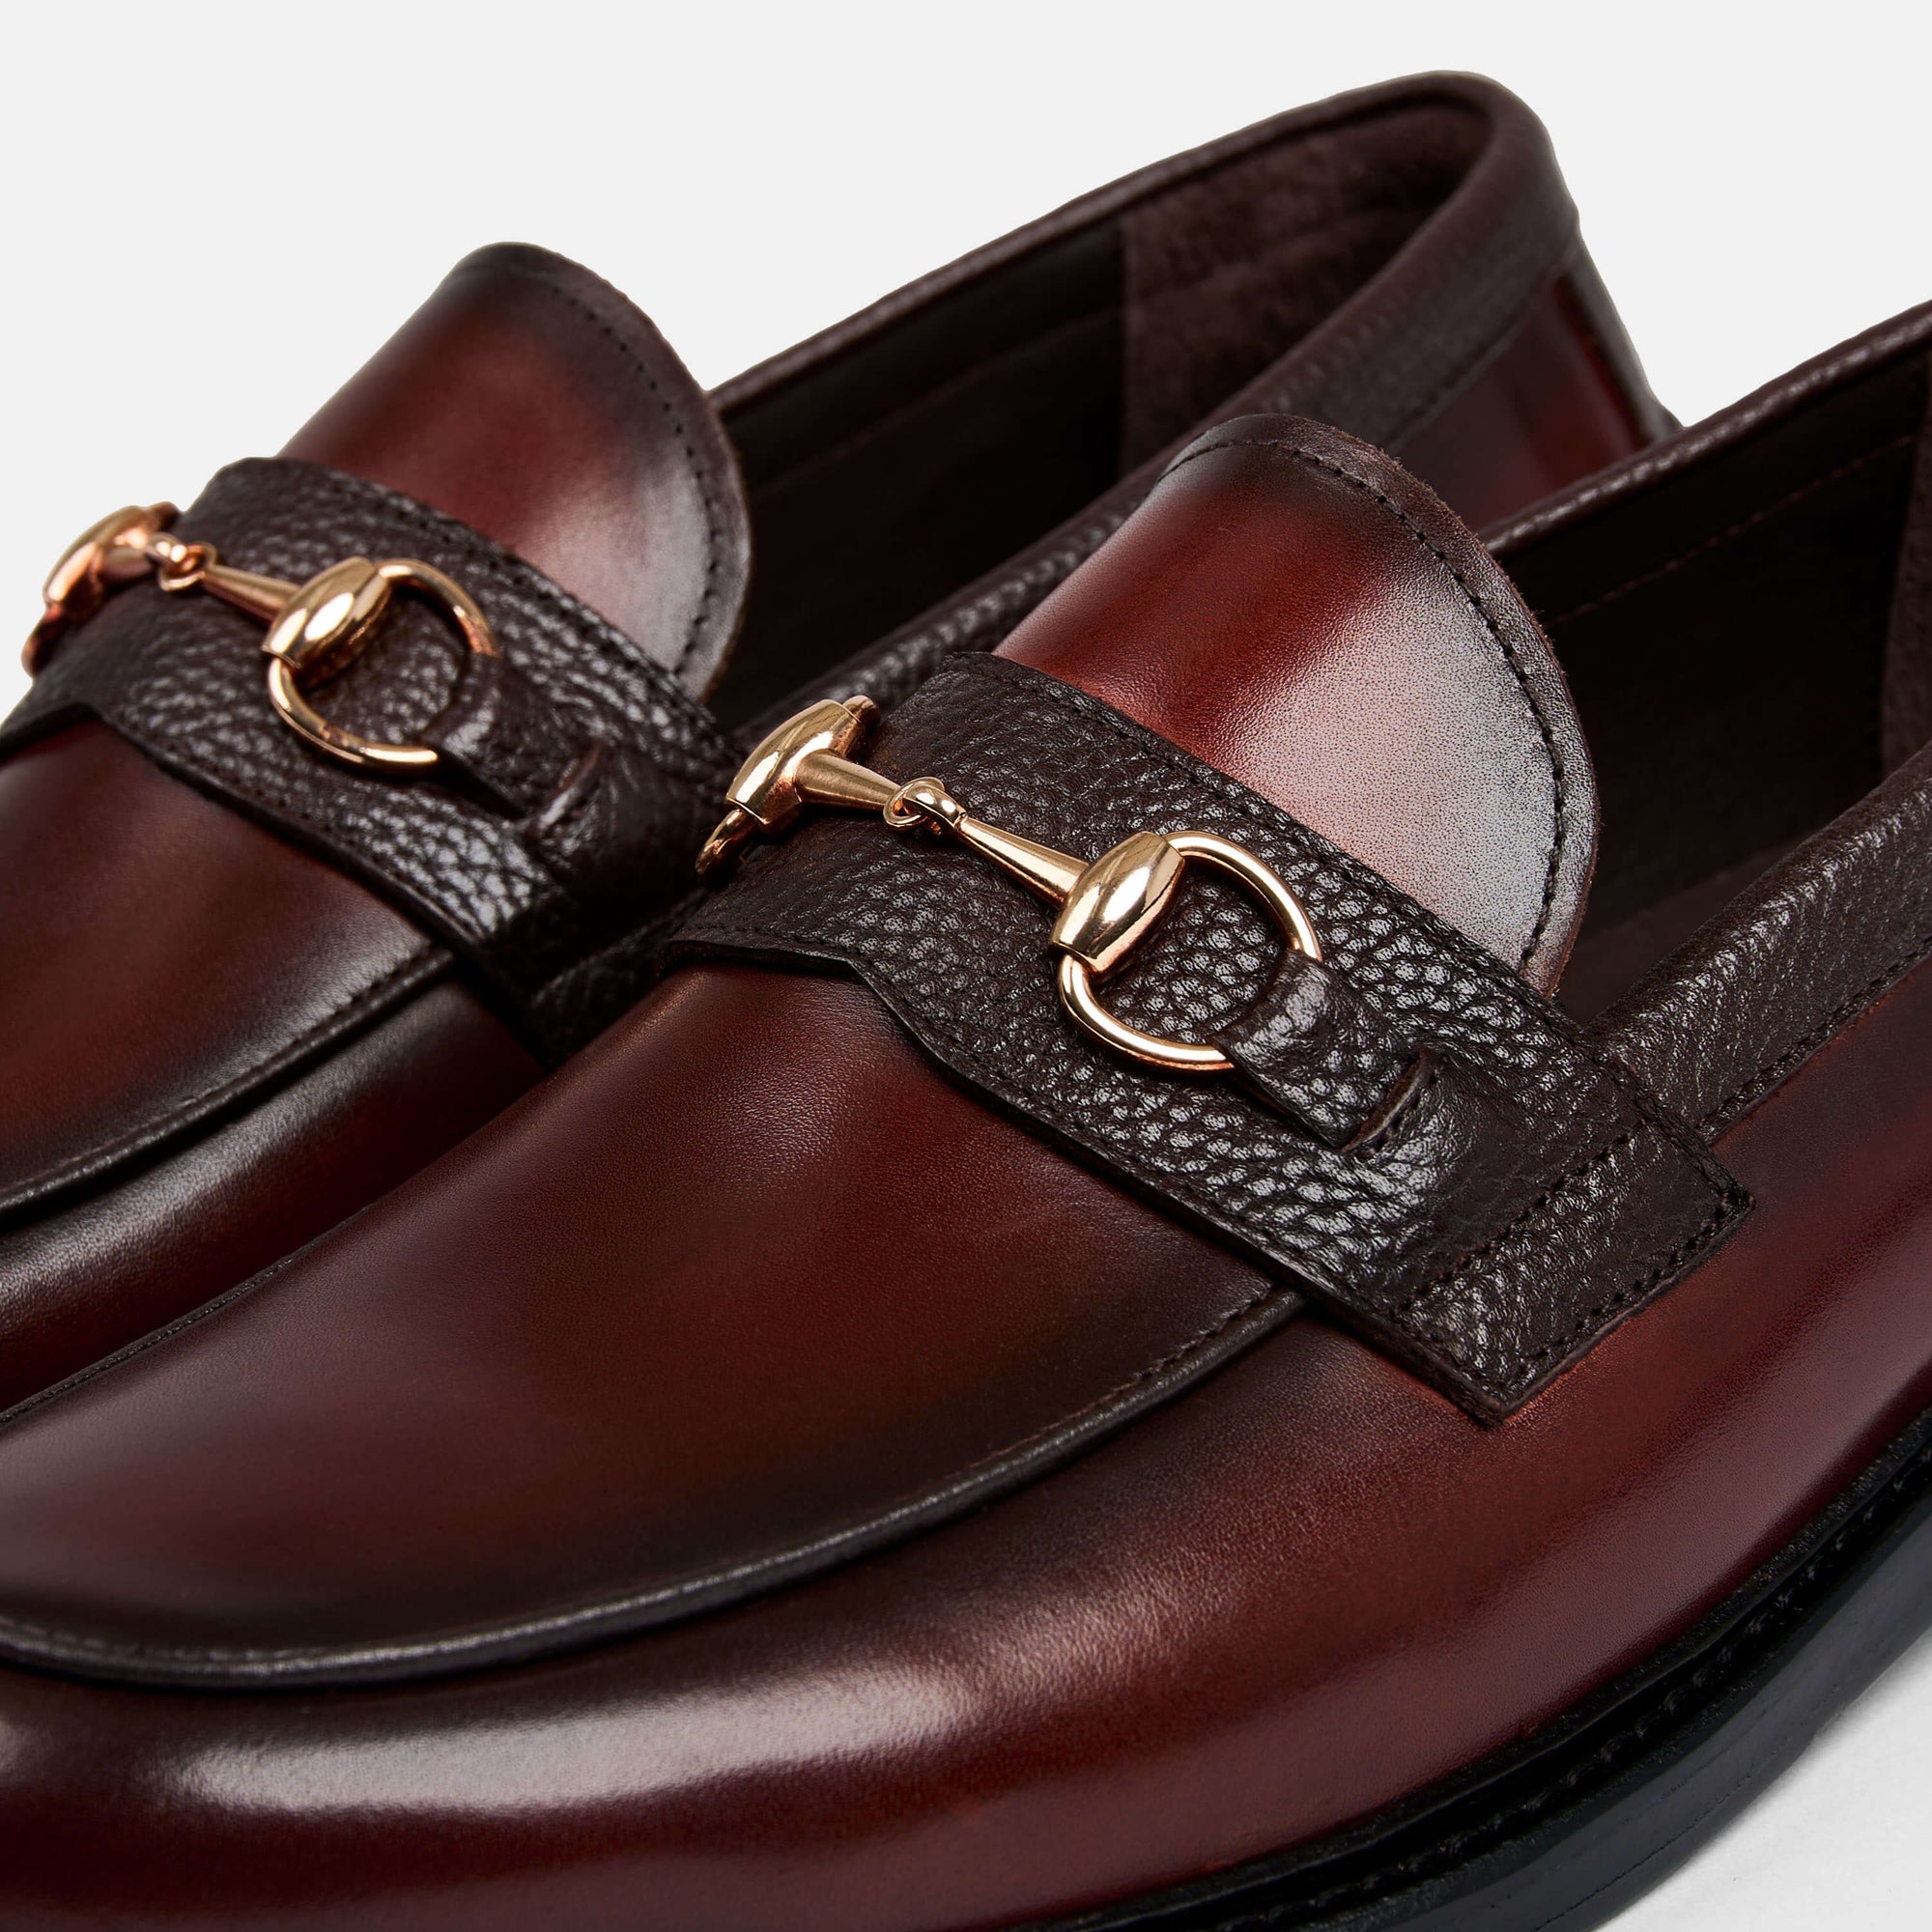 Men's Gucci Horsebit Penny Loafers Dress Shoes Size 12.5 Black Leather